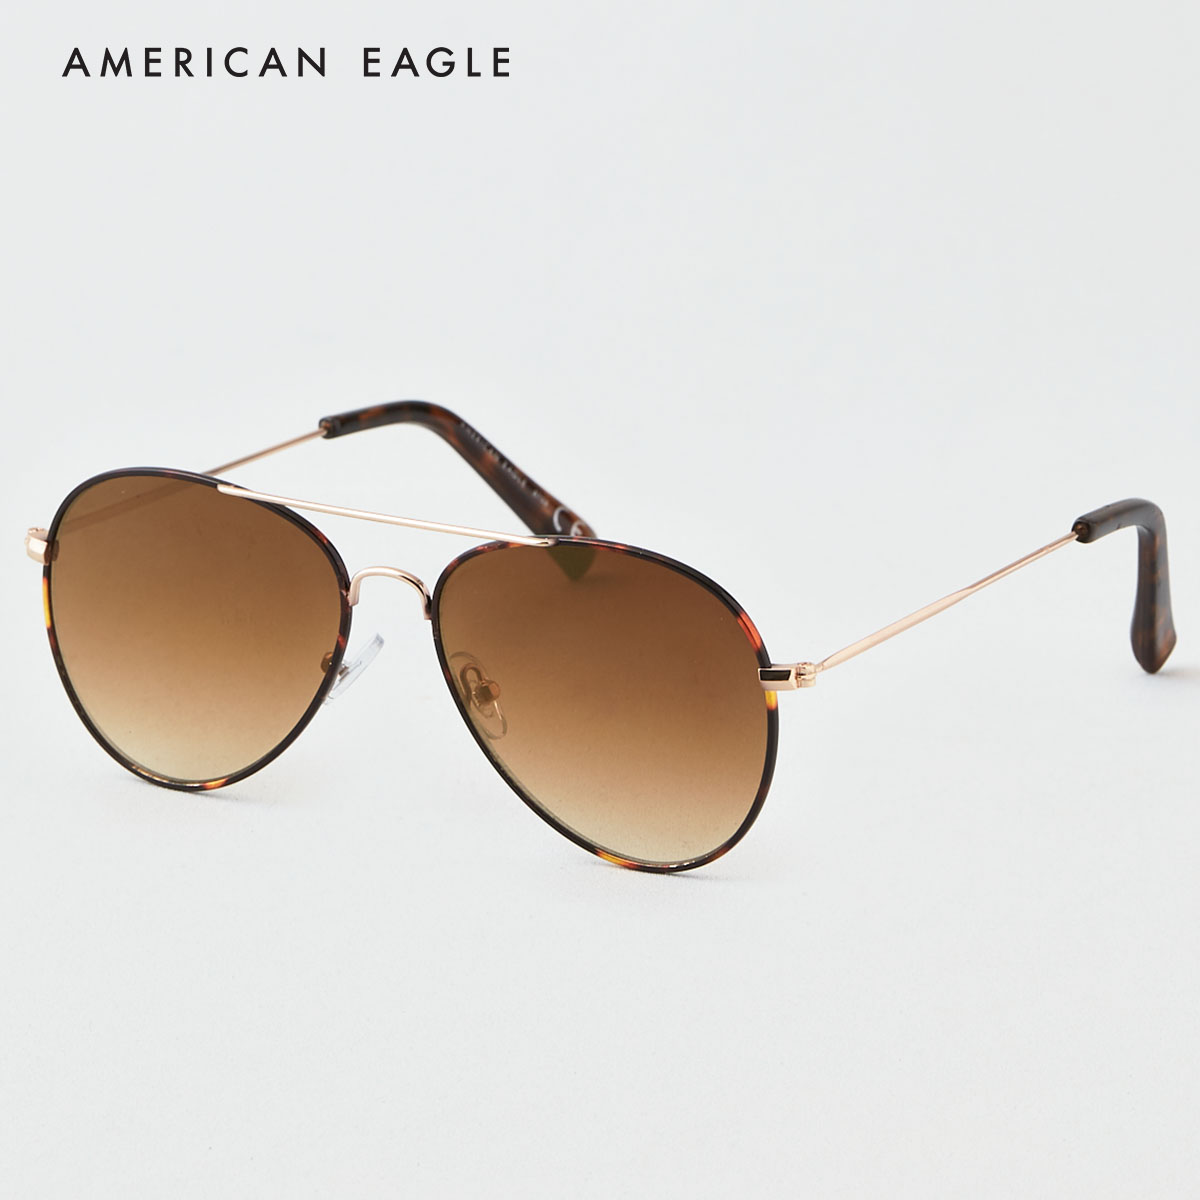 American Eagle Tortoise Aviator Sunglasses แว่นตา ผู้หญิง แฟชั่น(048-8759-251)